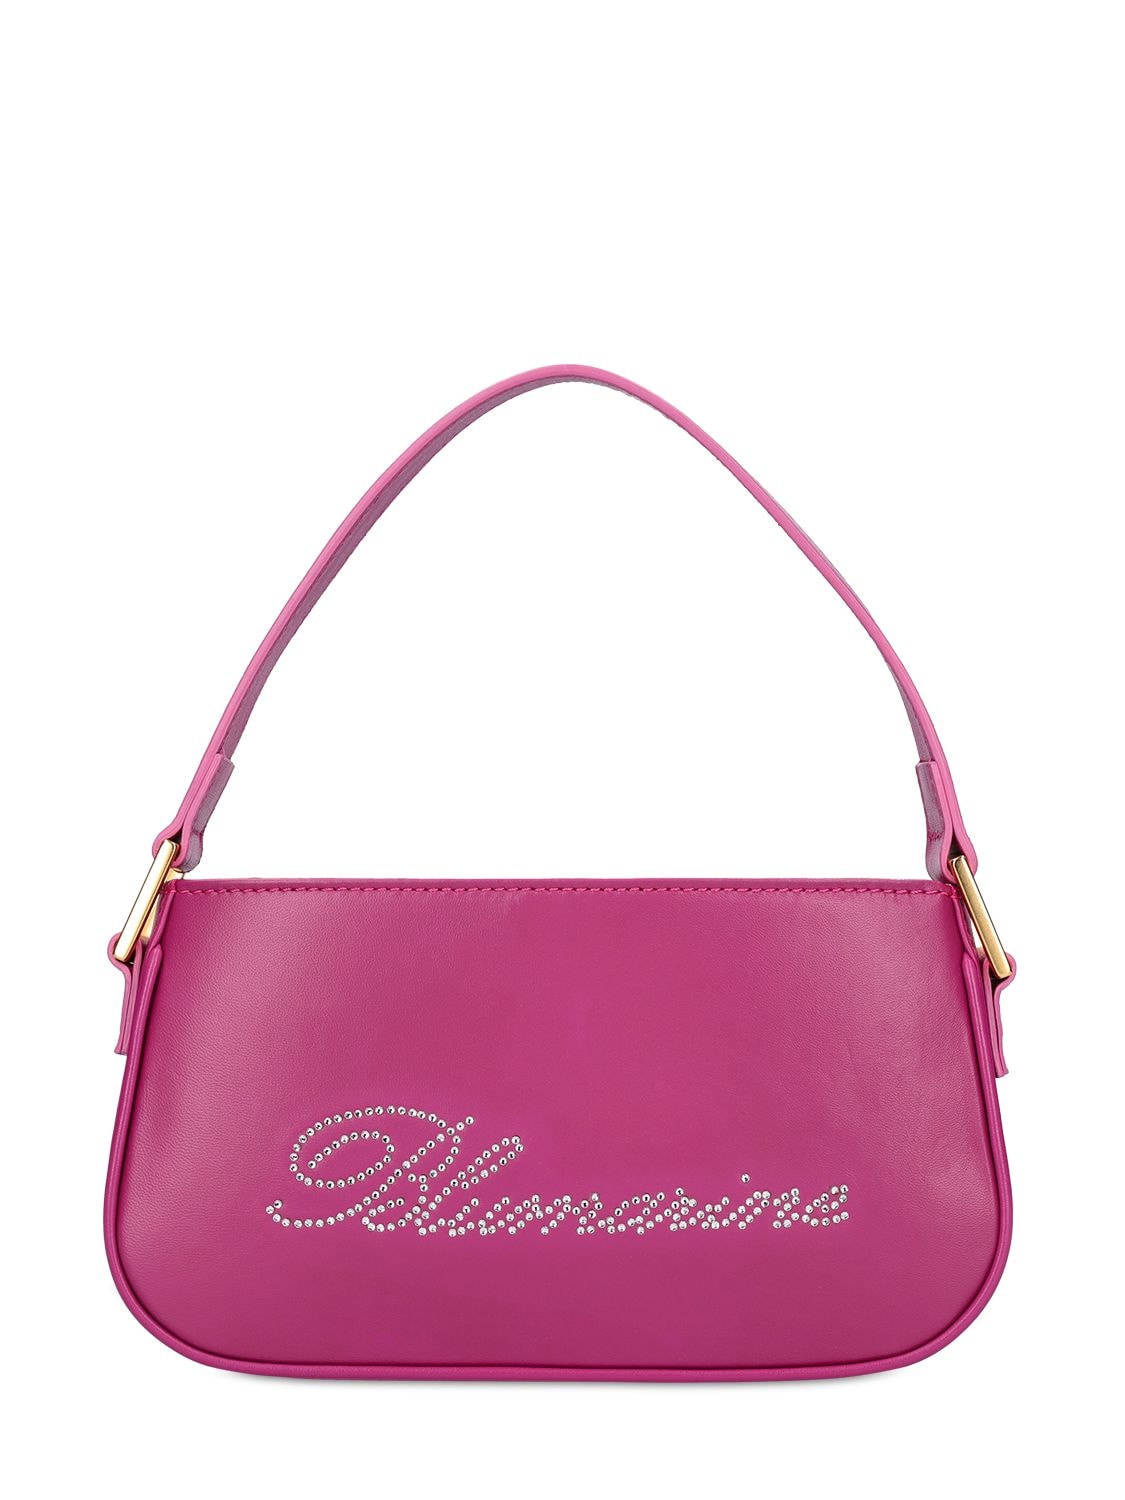 BLUMARINE Bags for Women | ModeSens